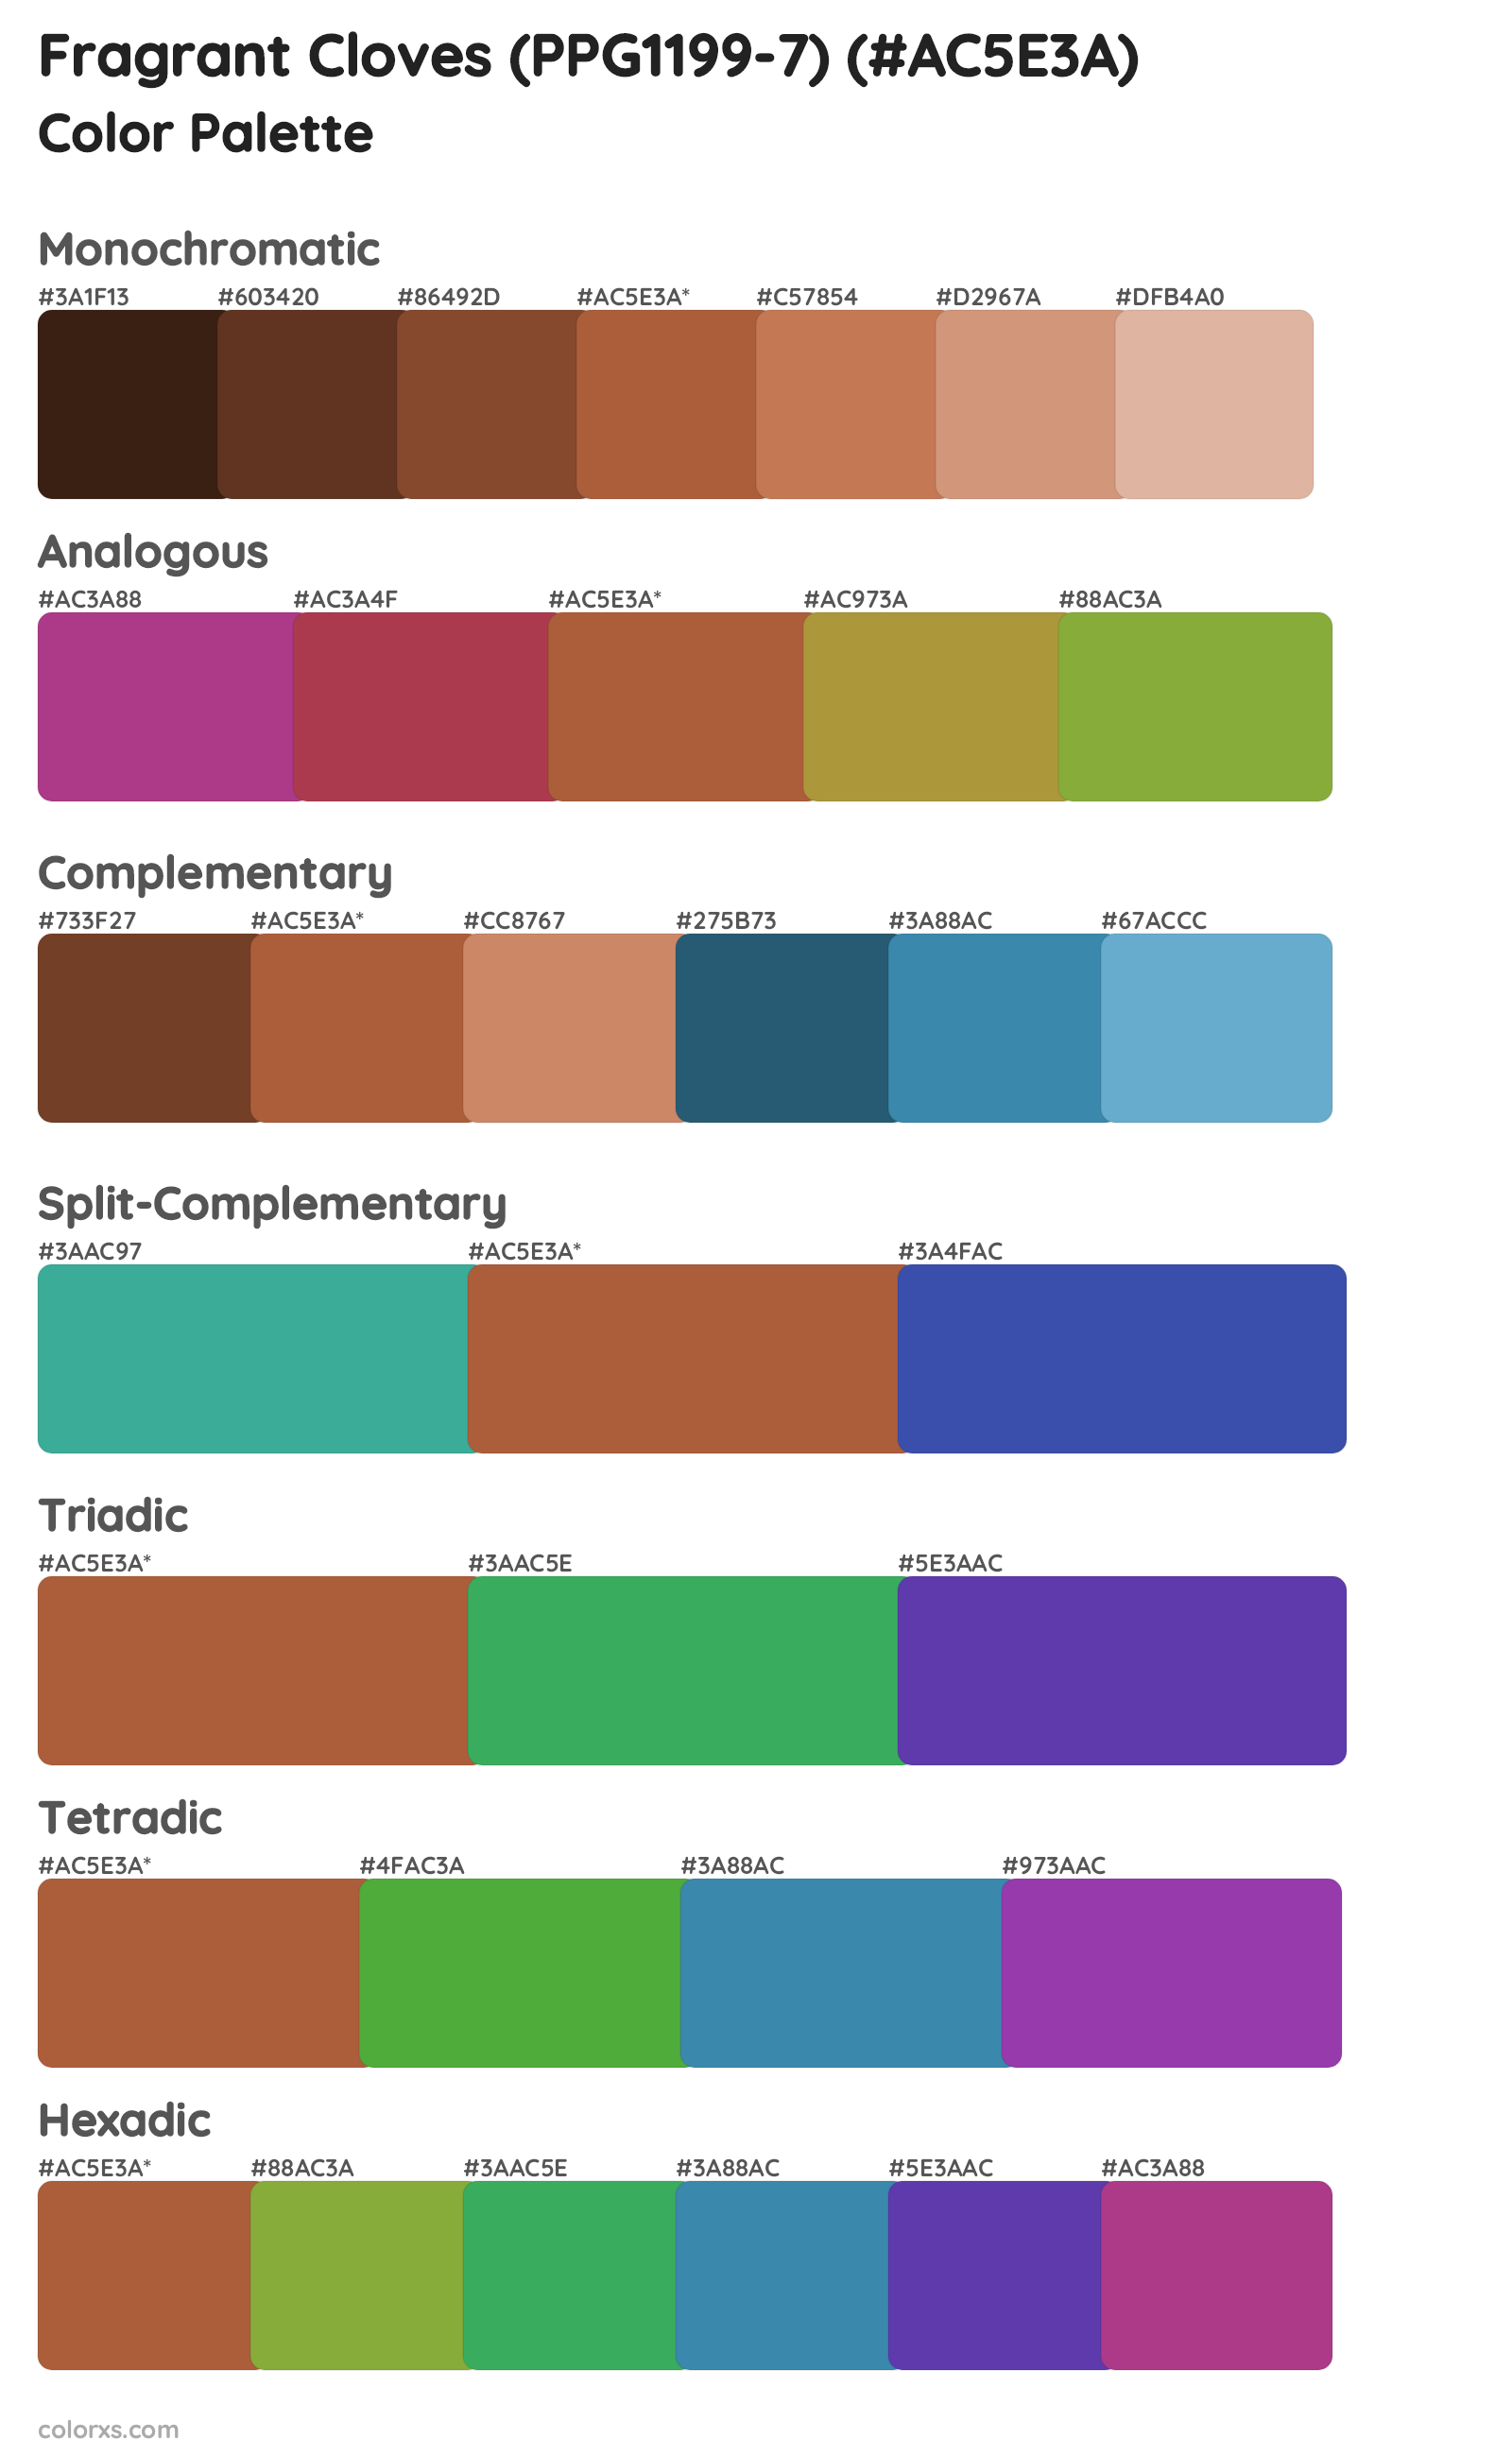 Fragrant Cloves (PPG1199-7) Color Scheme Palettes